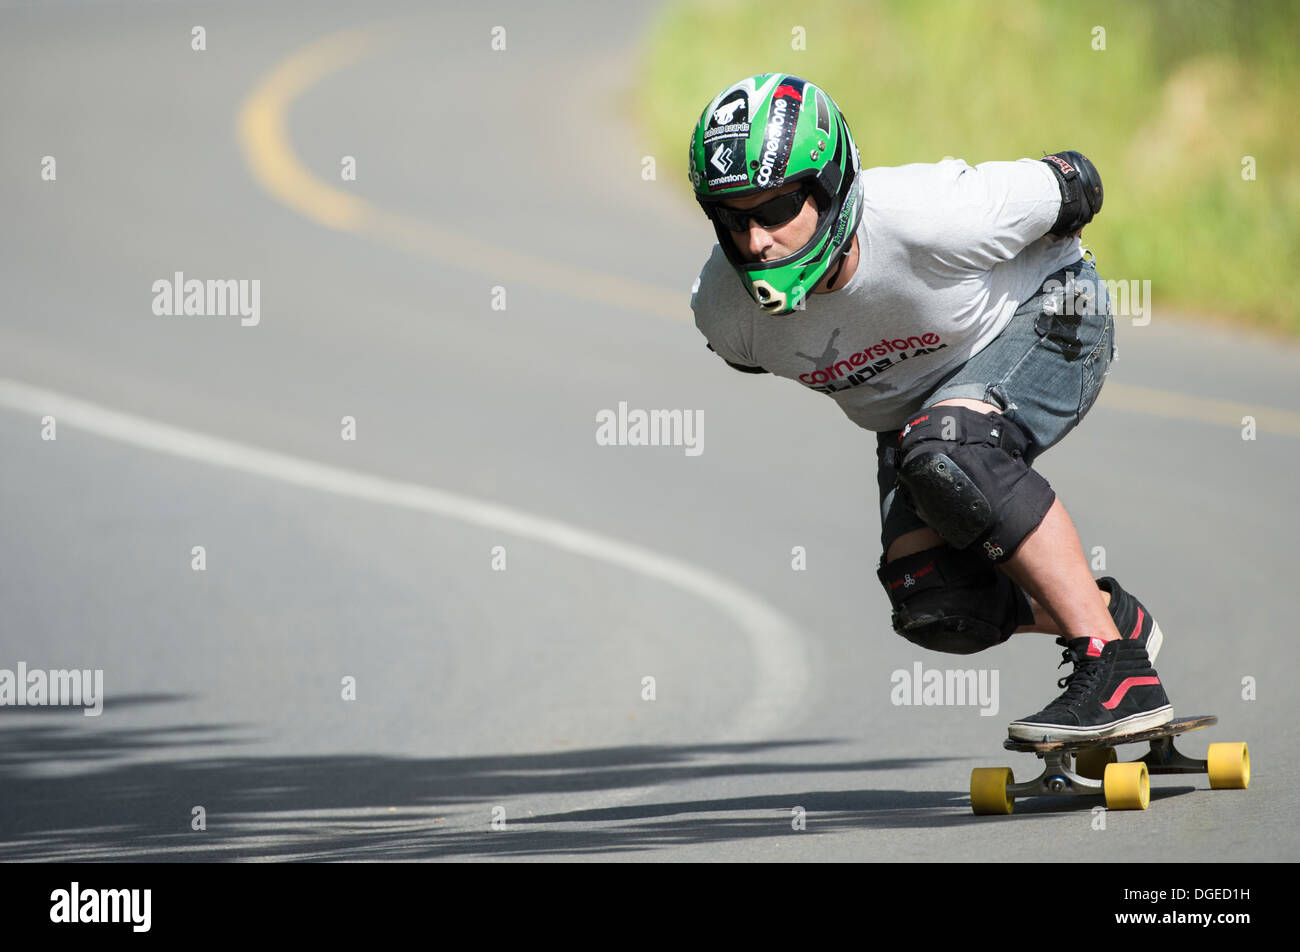 skateboard longboard man training downhill on public road Stock Photo